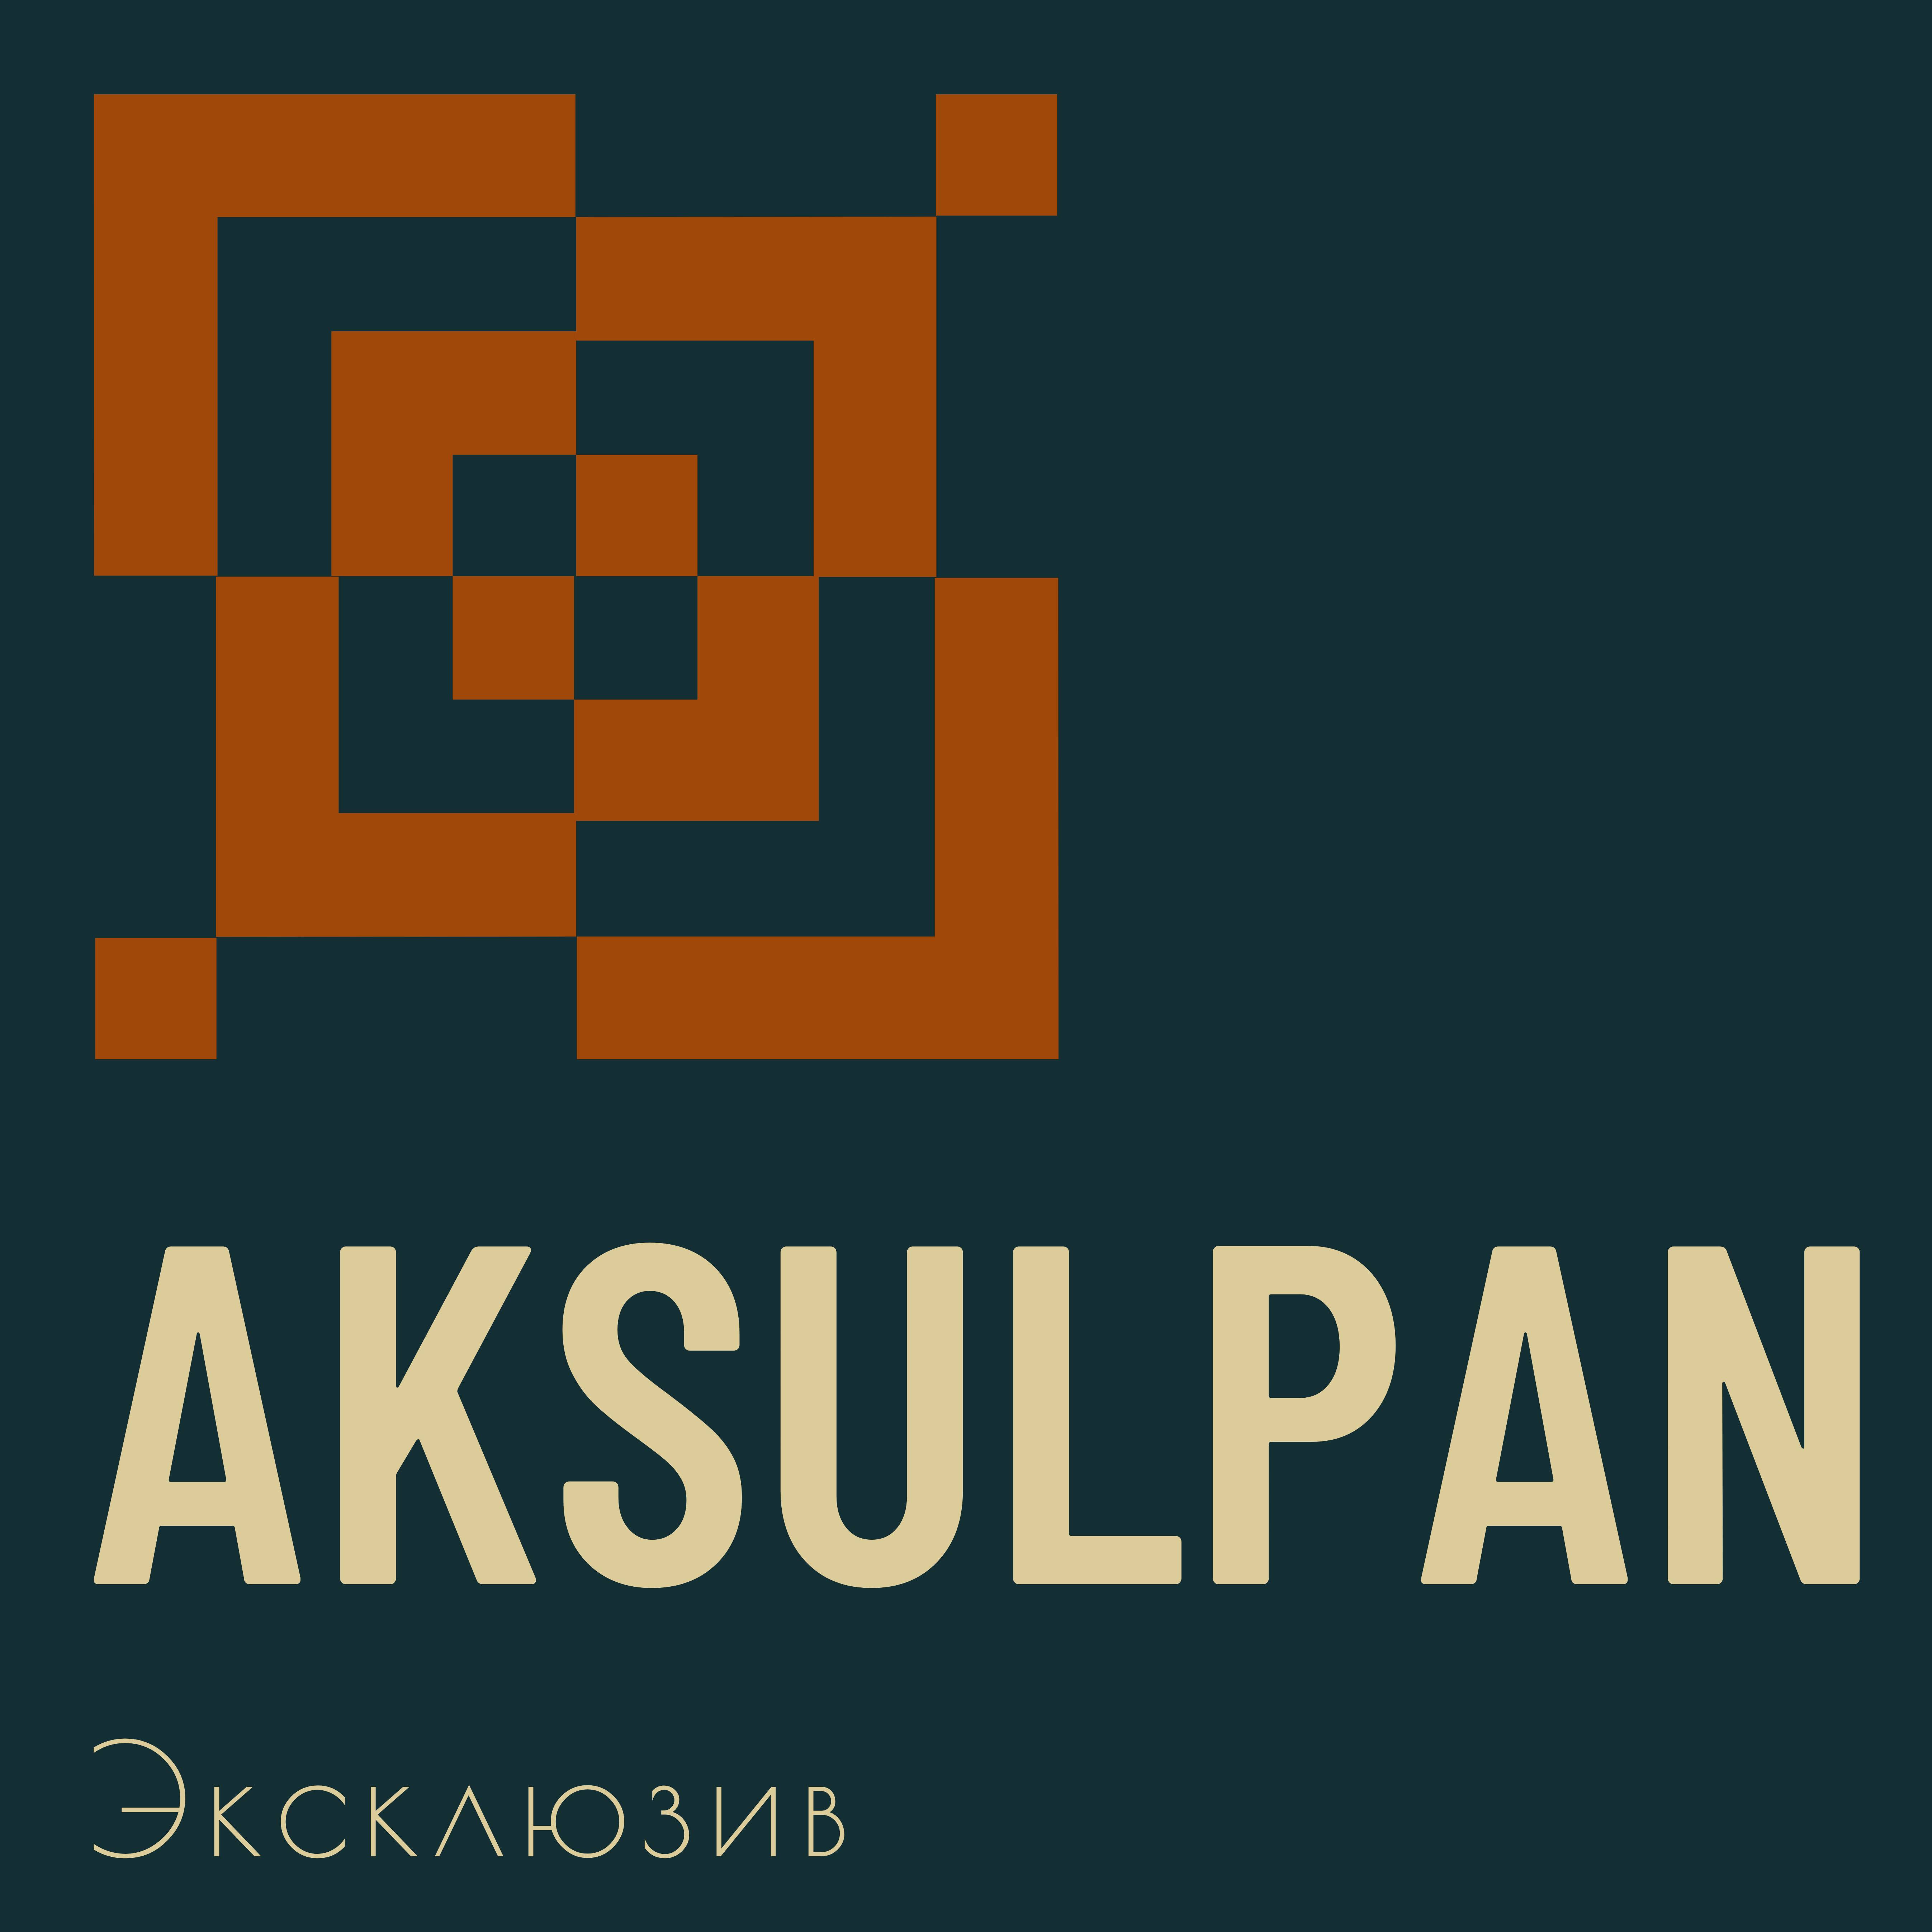 Иконка канала AKSULPAN